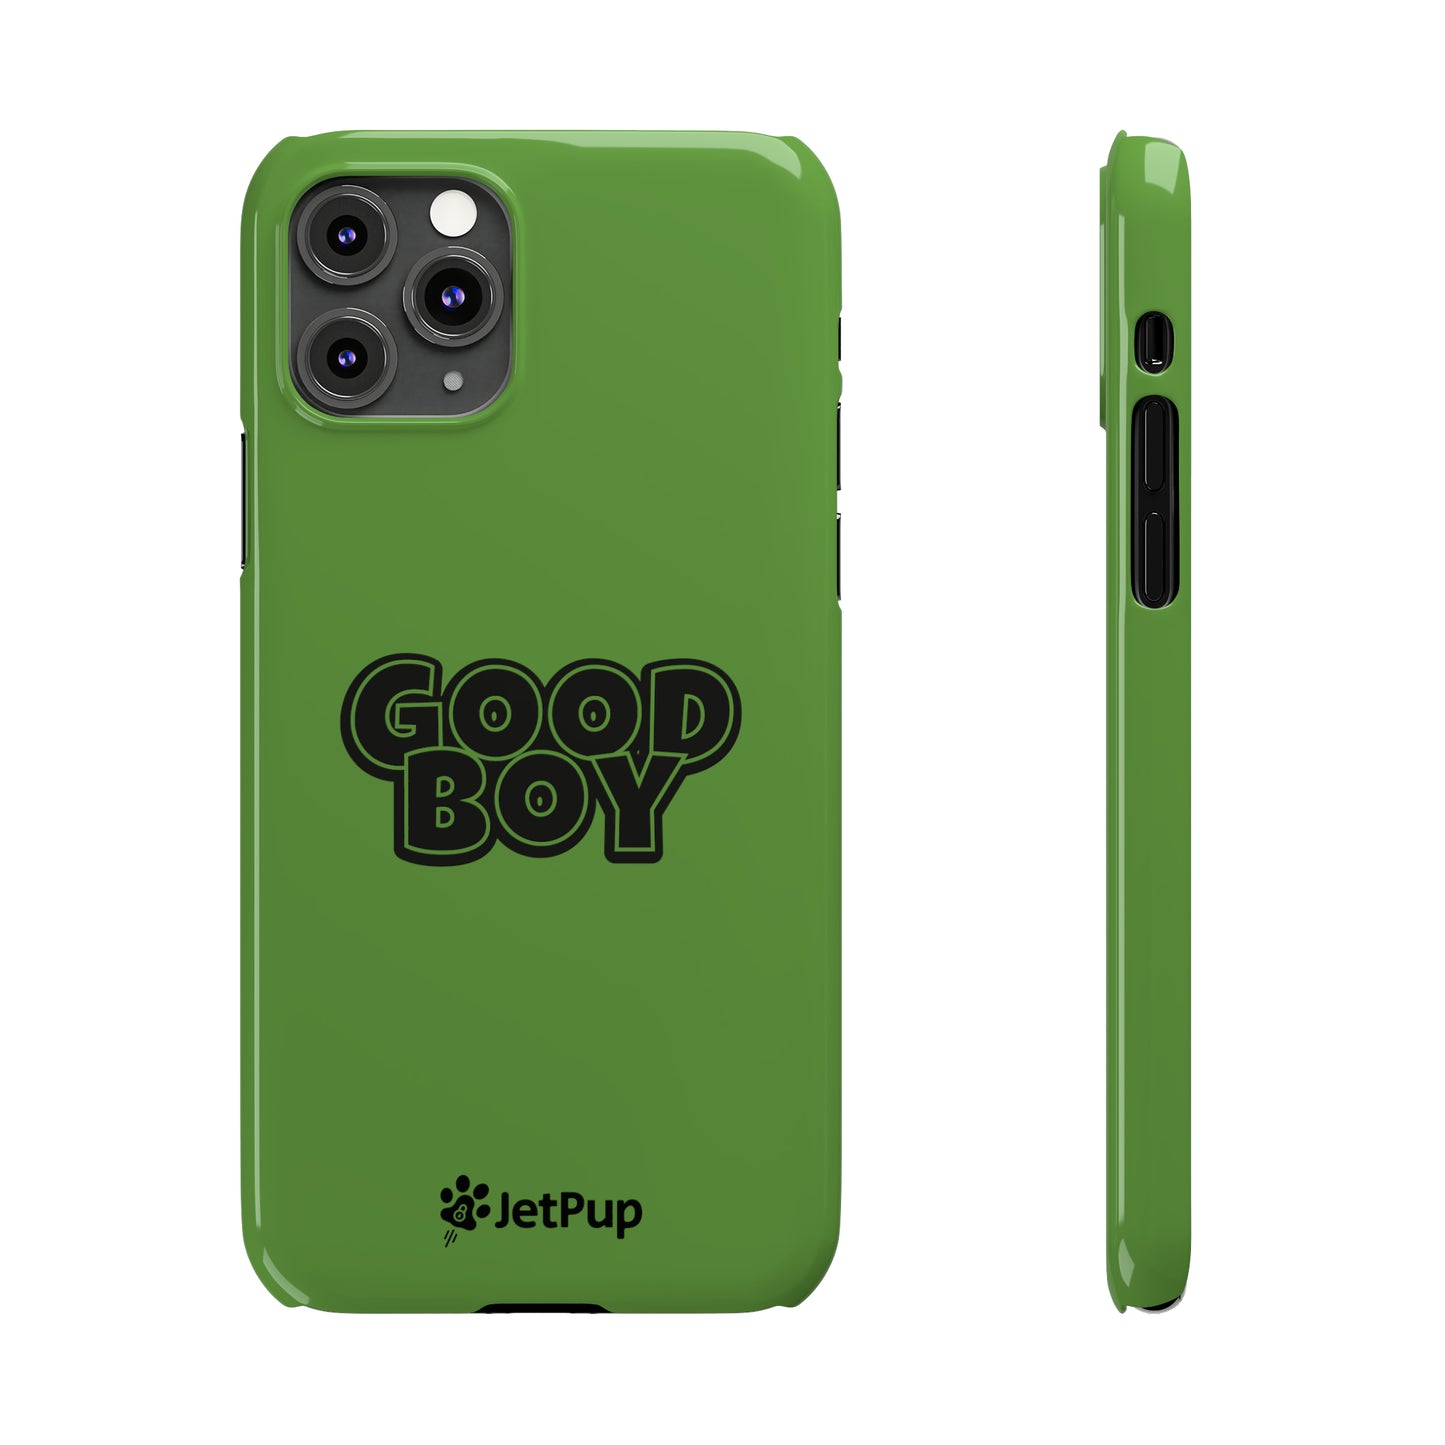 Good Boy Slim iPhone Cases - Green